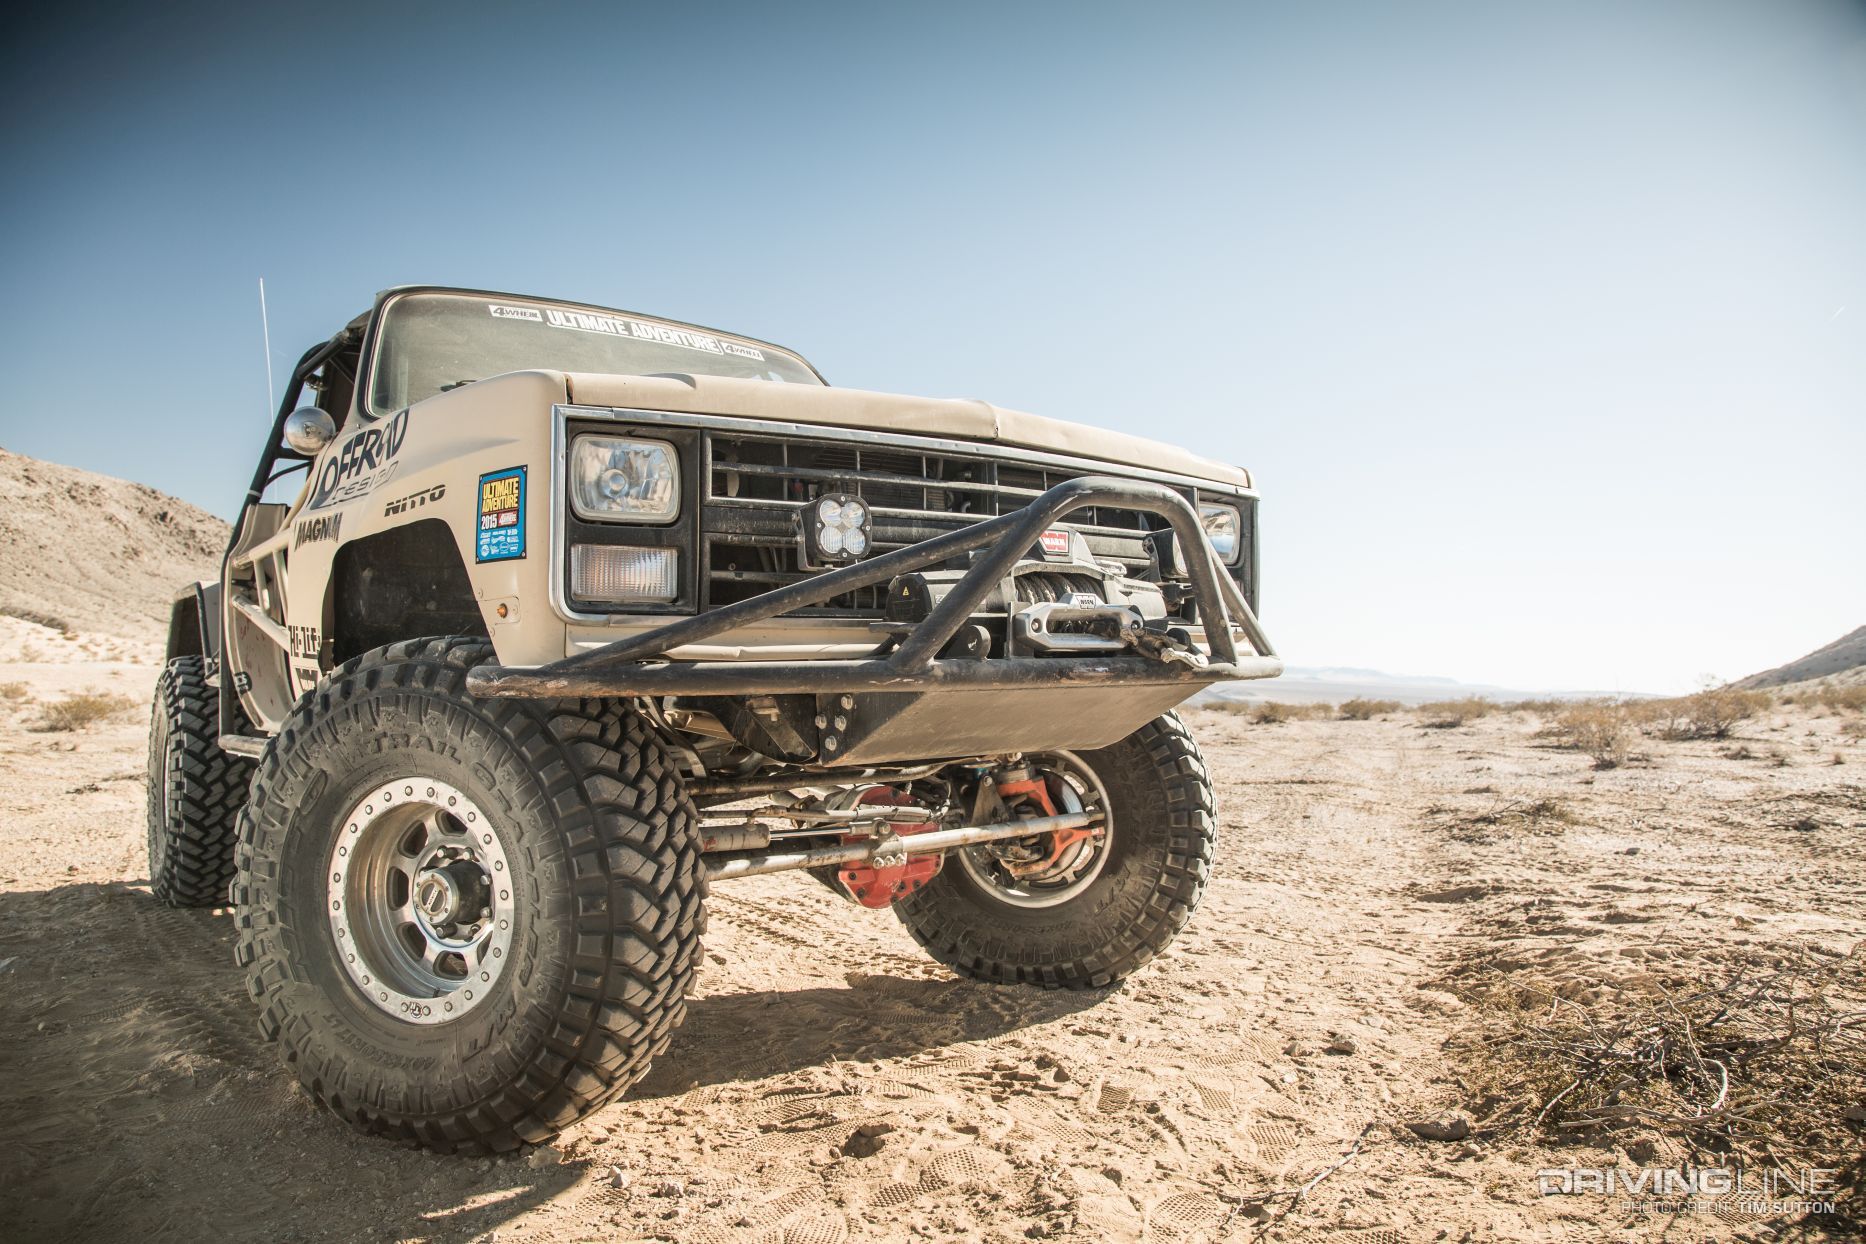 Killer K30 Offroad Designs Latest Chevy Truck Build.